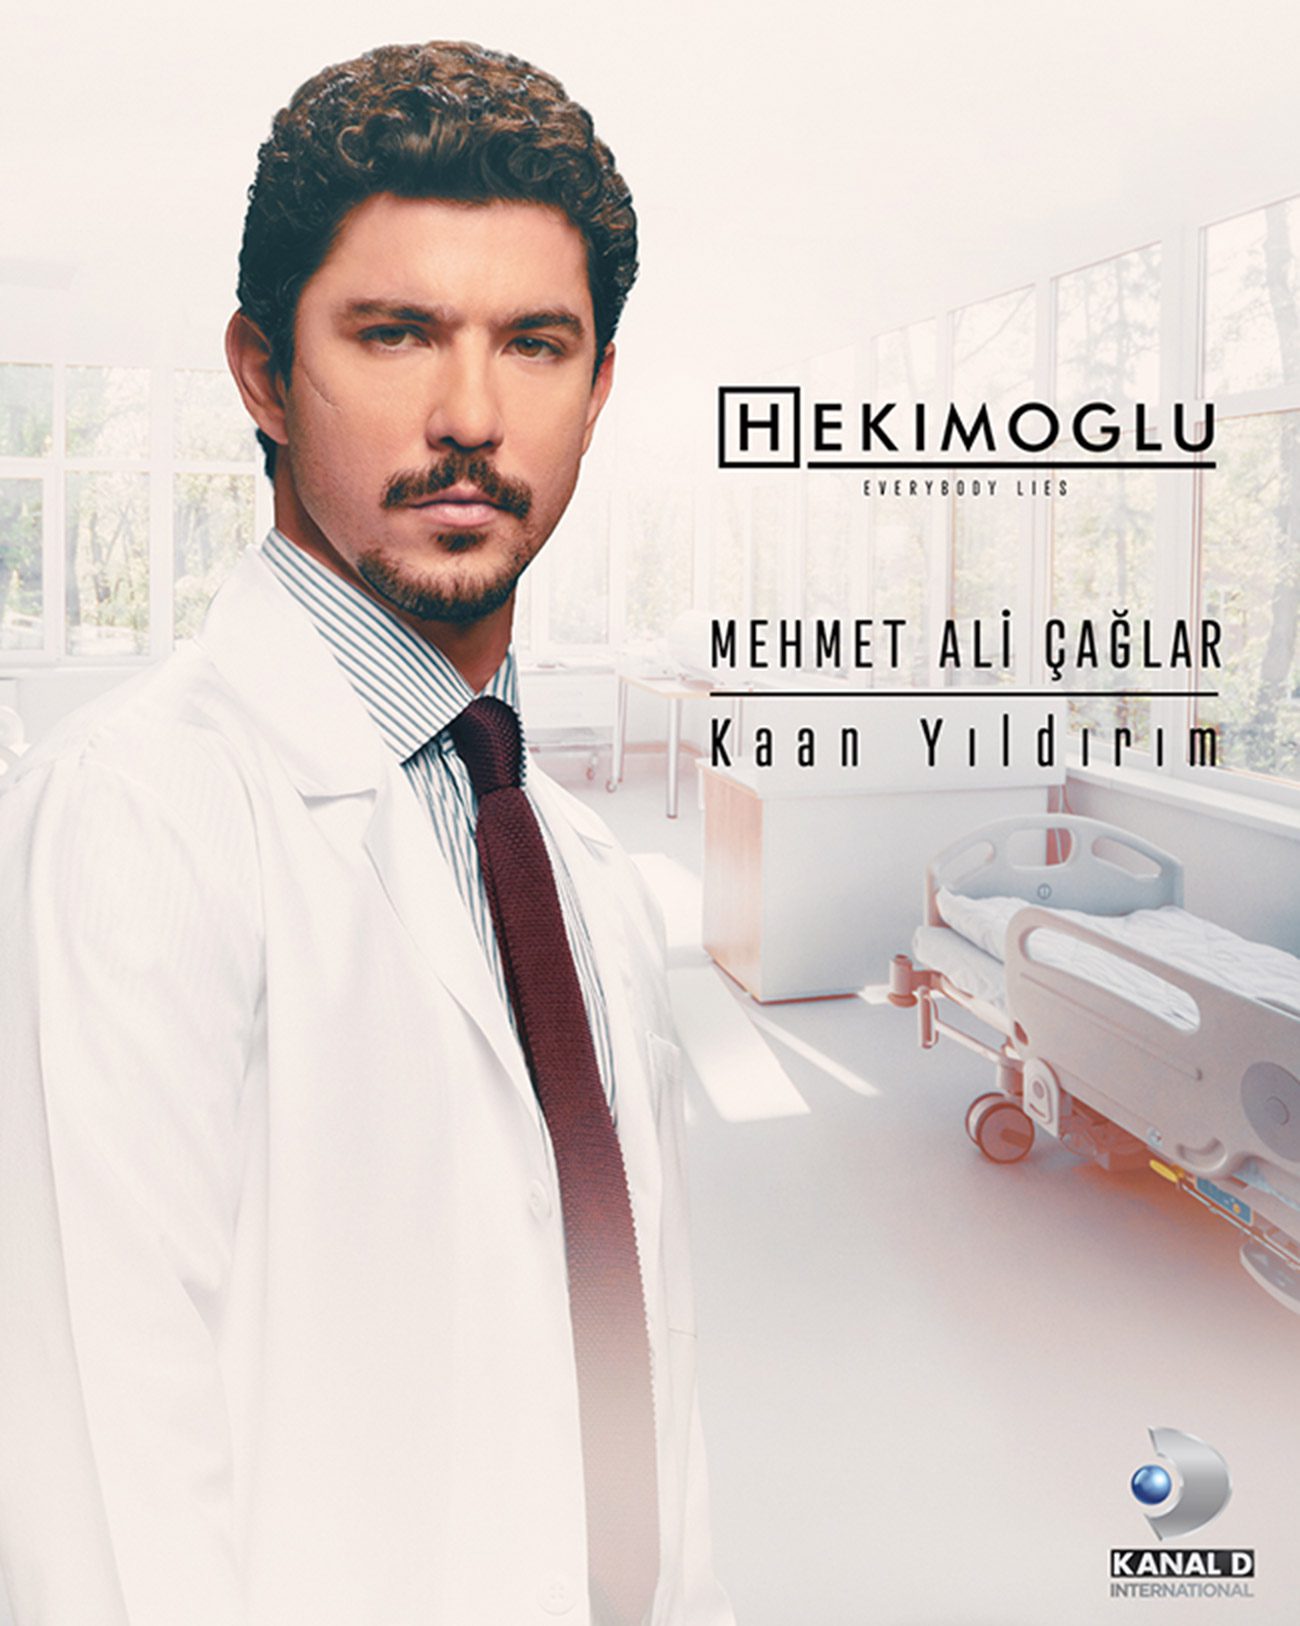 Elenco Hekimoğlu